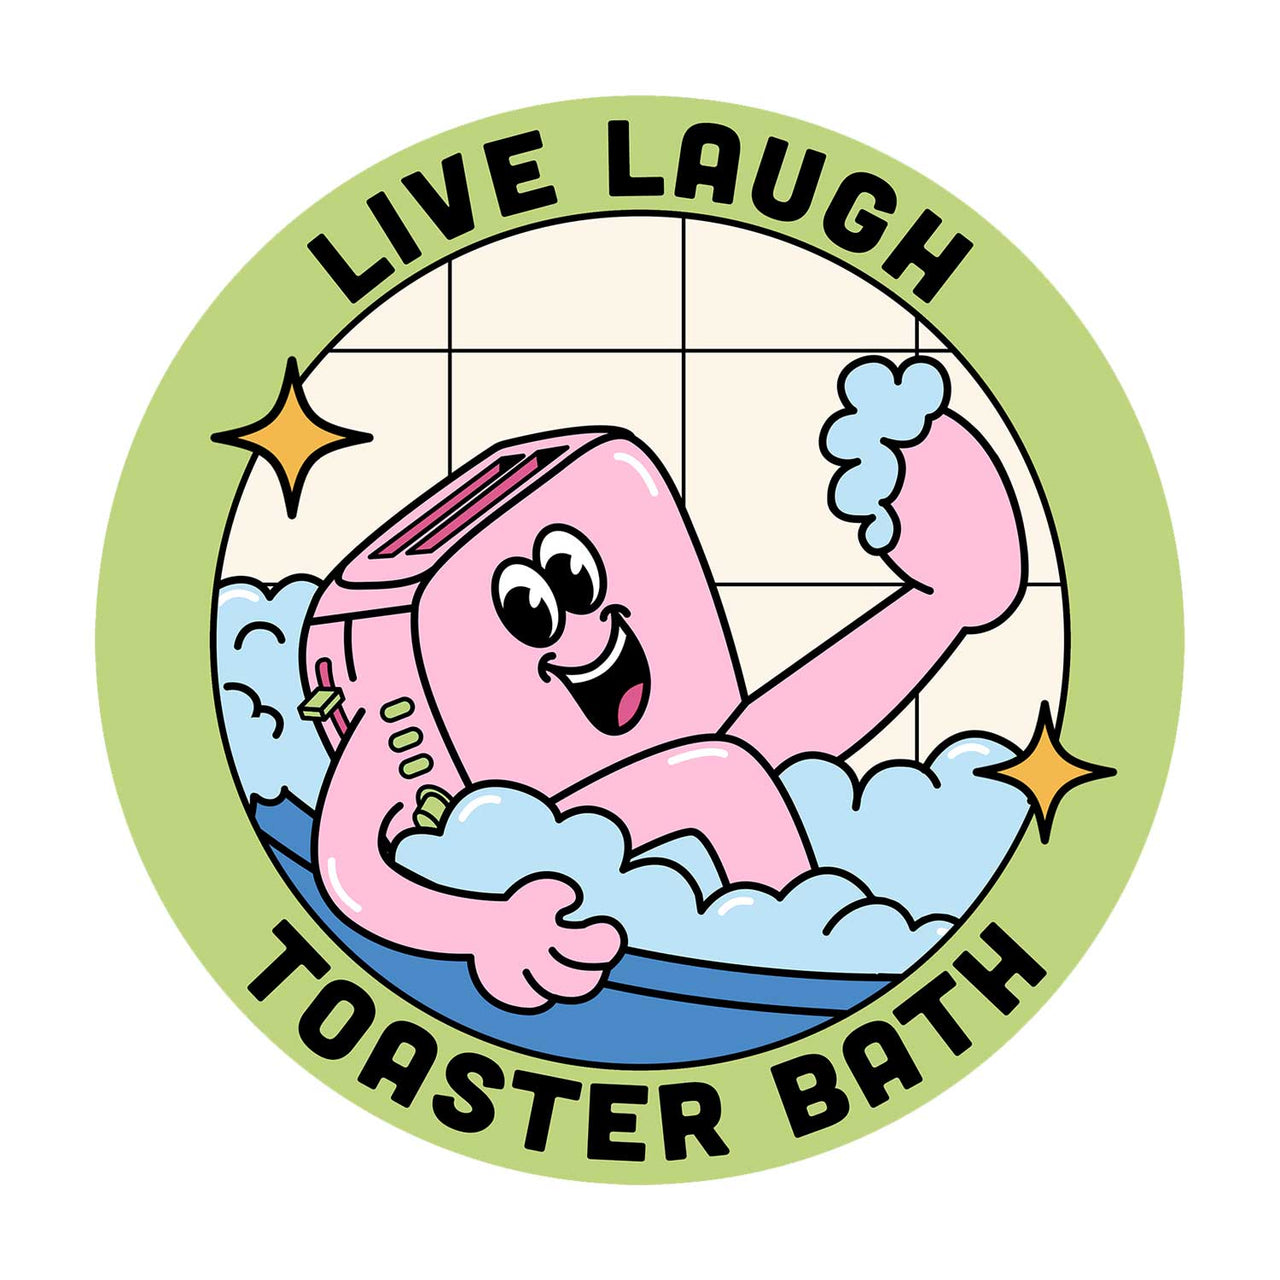 Live, Laugh, Toaster Bath Sticker